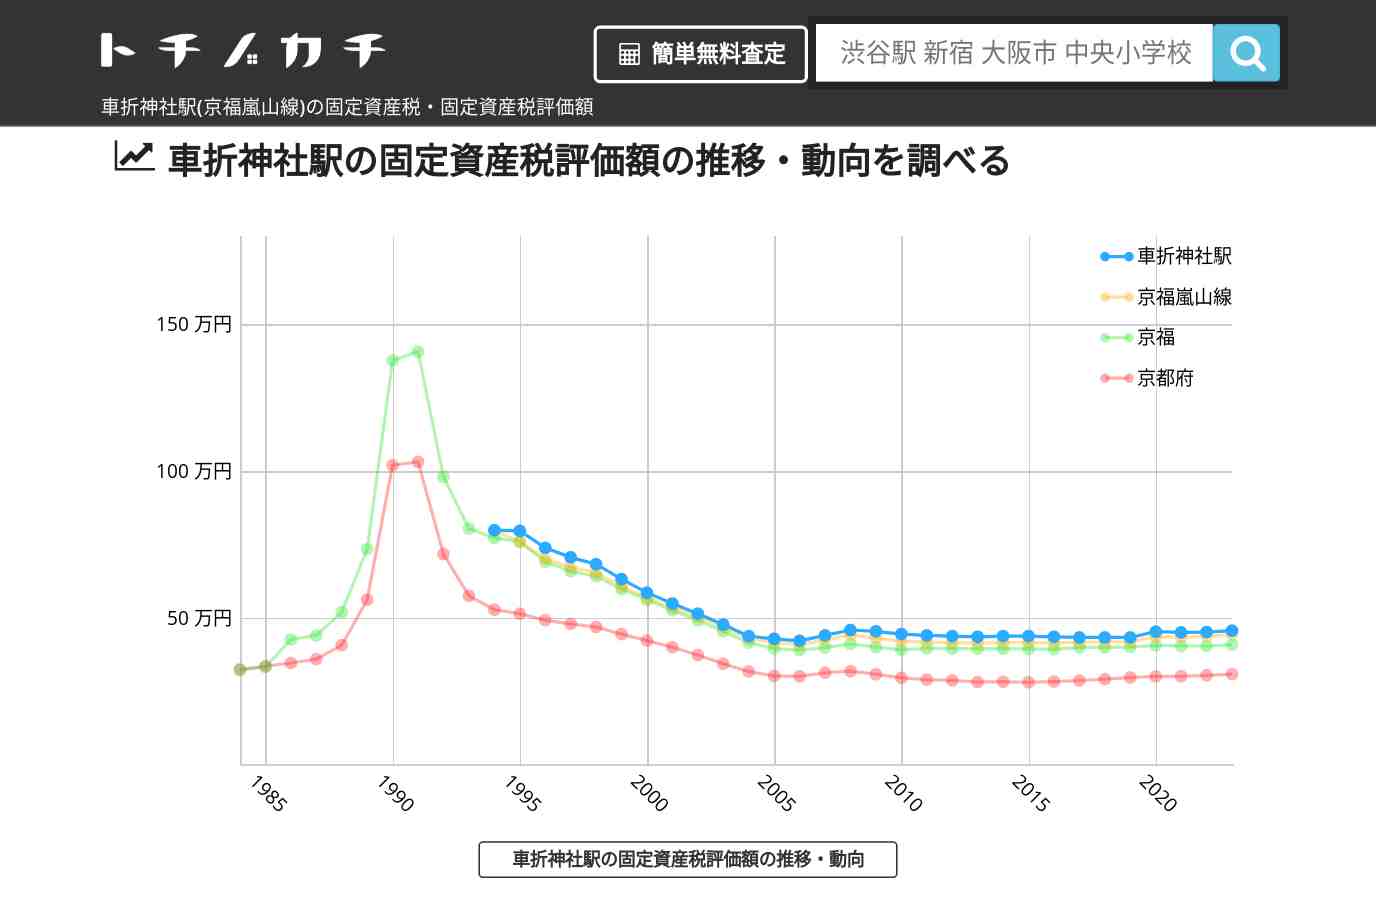 車折神社駅(京福嵐山線)の固定資産税・固定資産税評価額 | トチノカチ